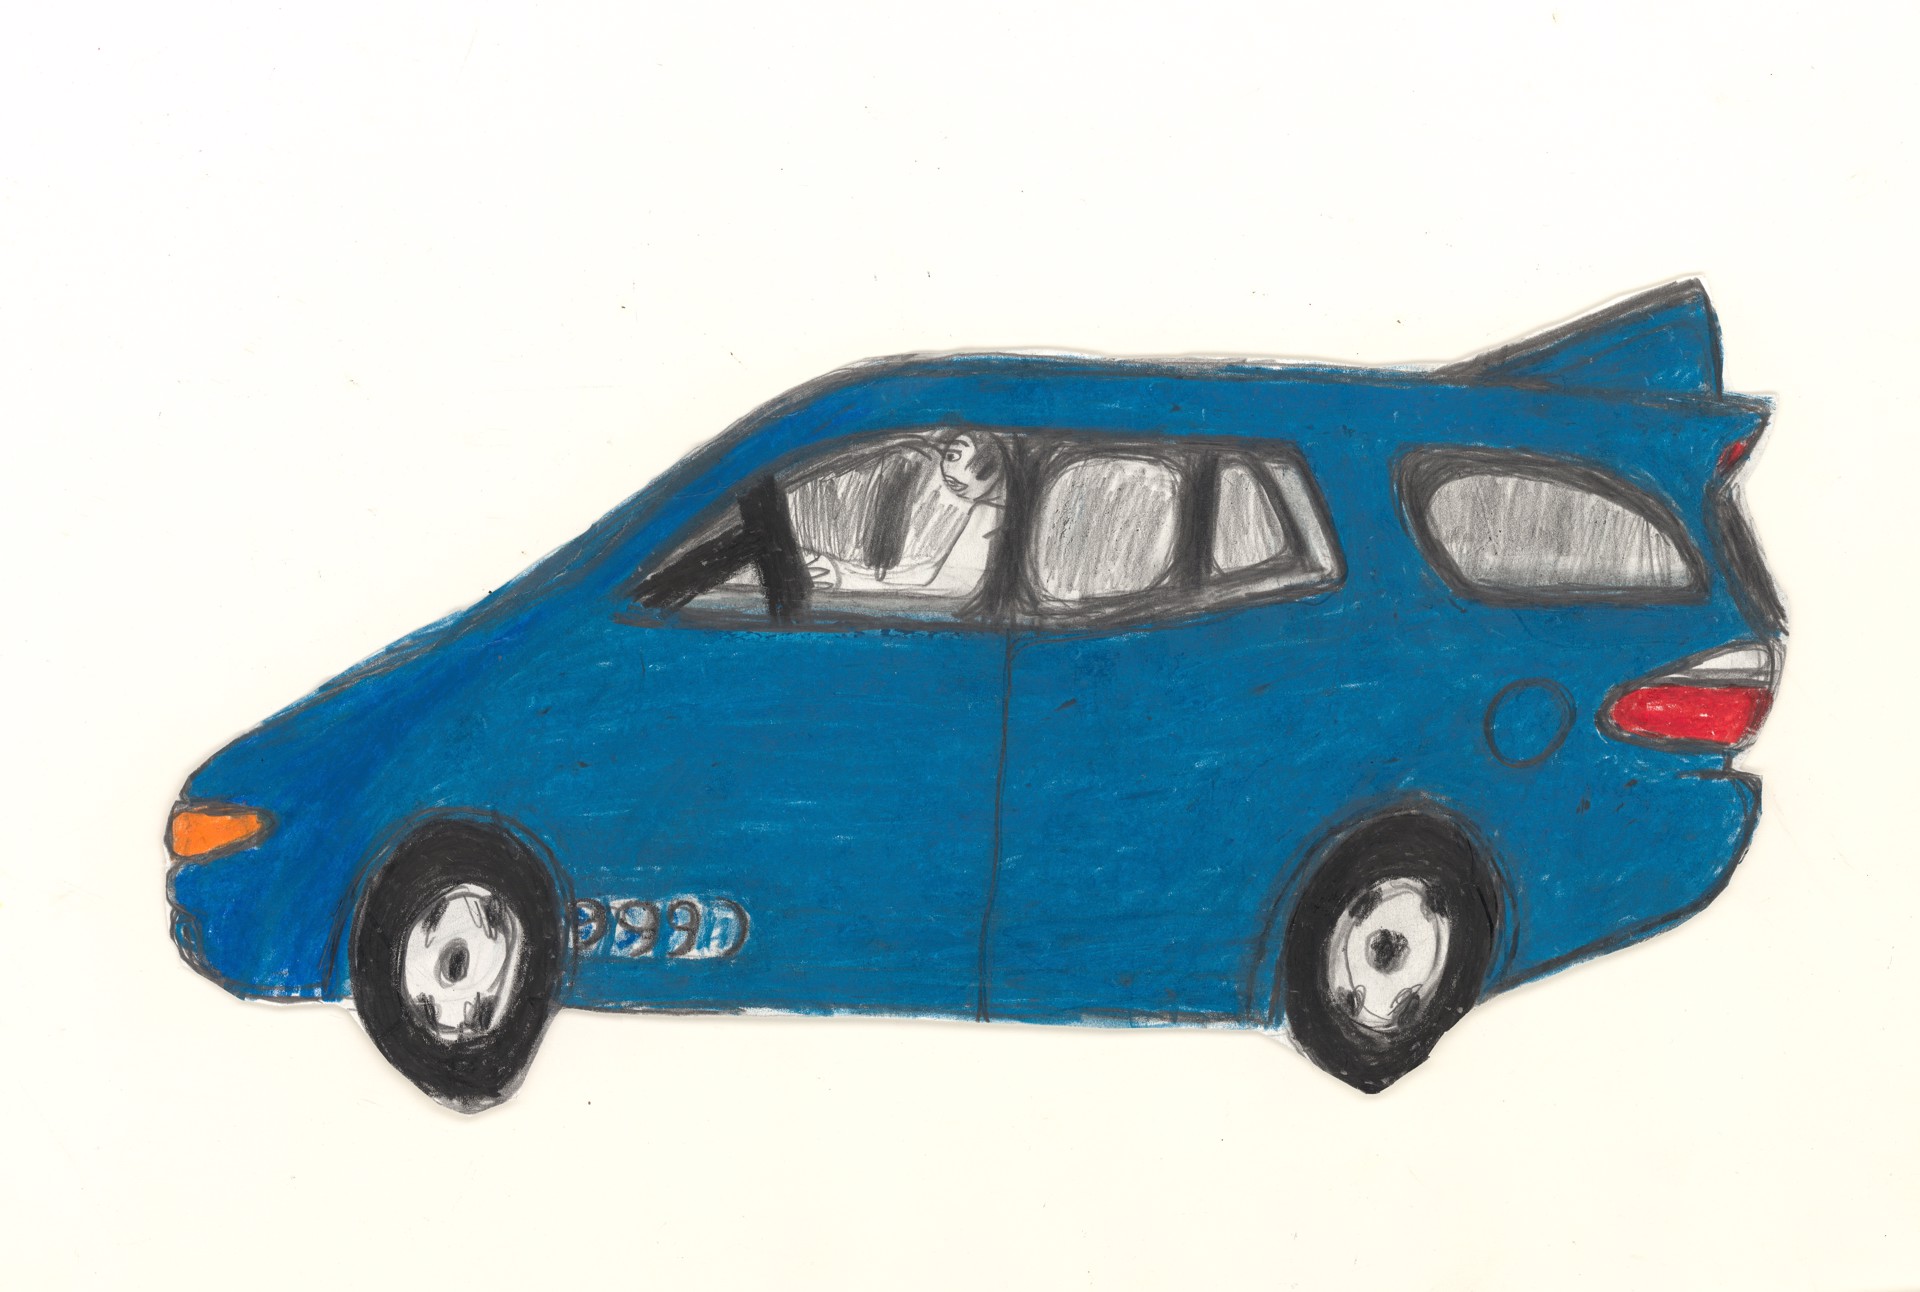 The Blue Car by Michael Haynes